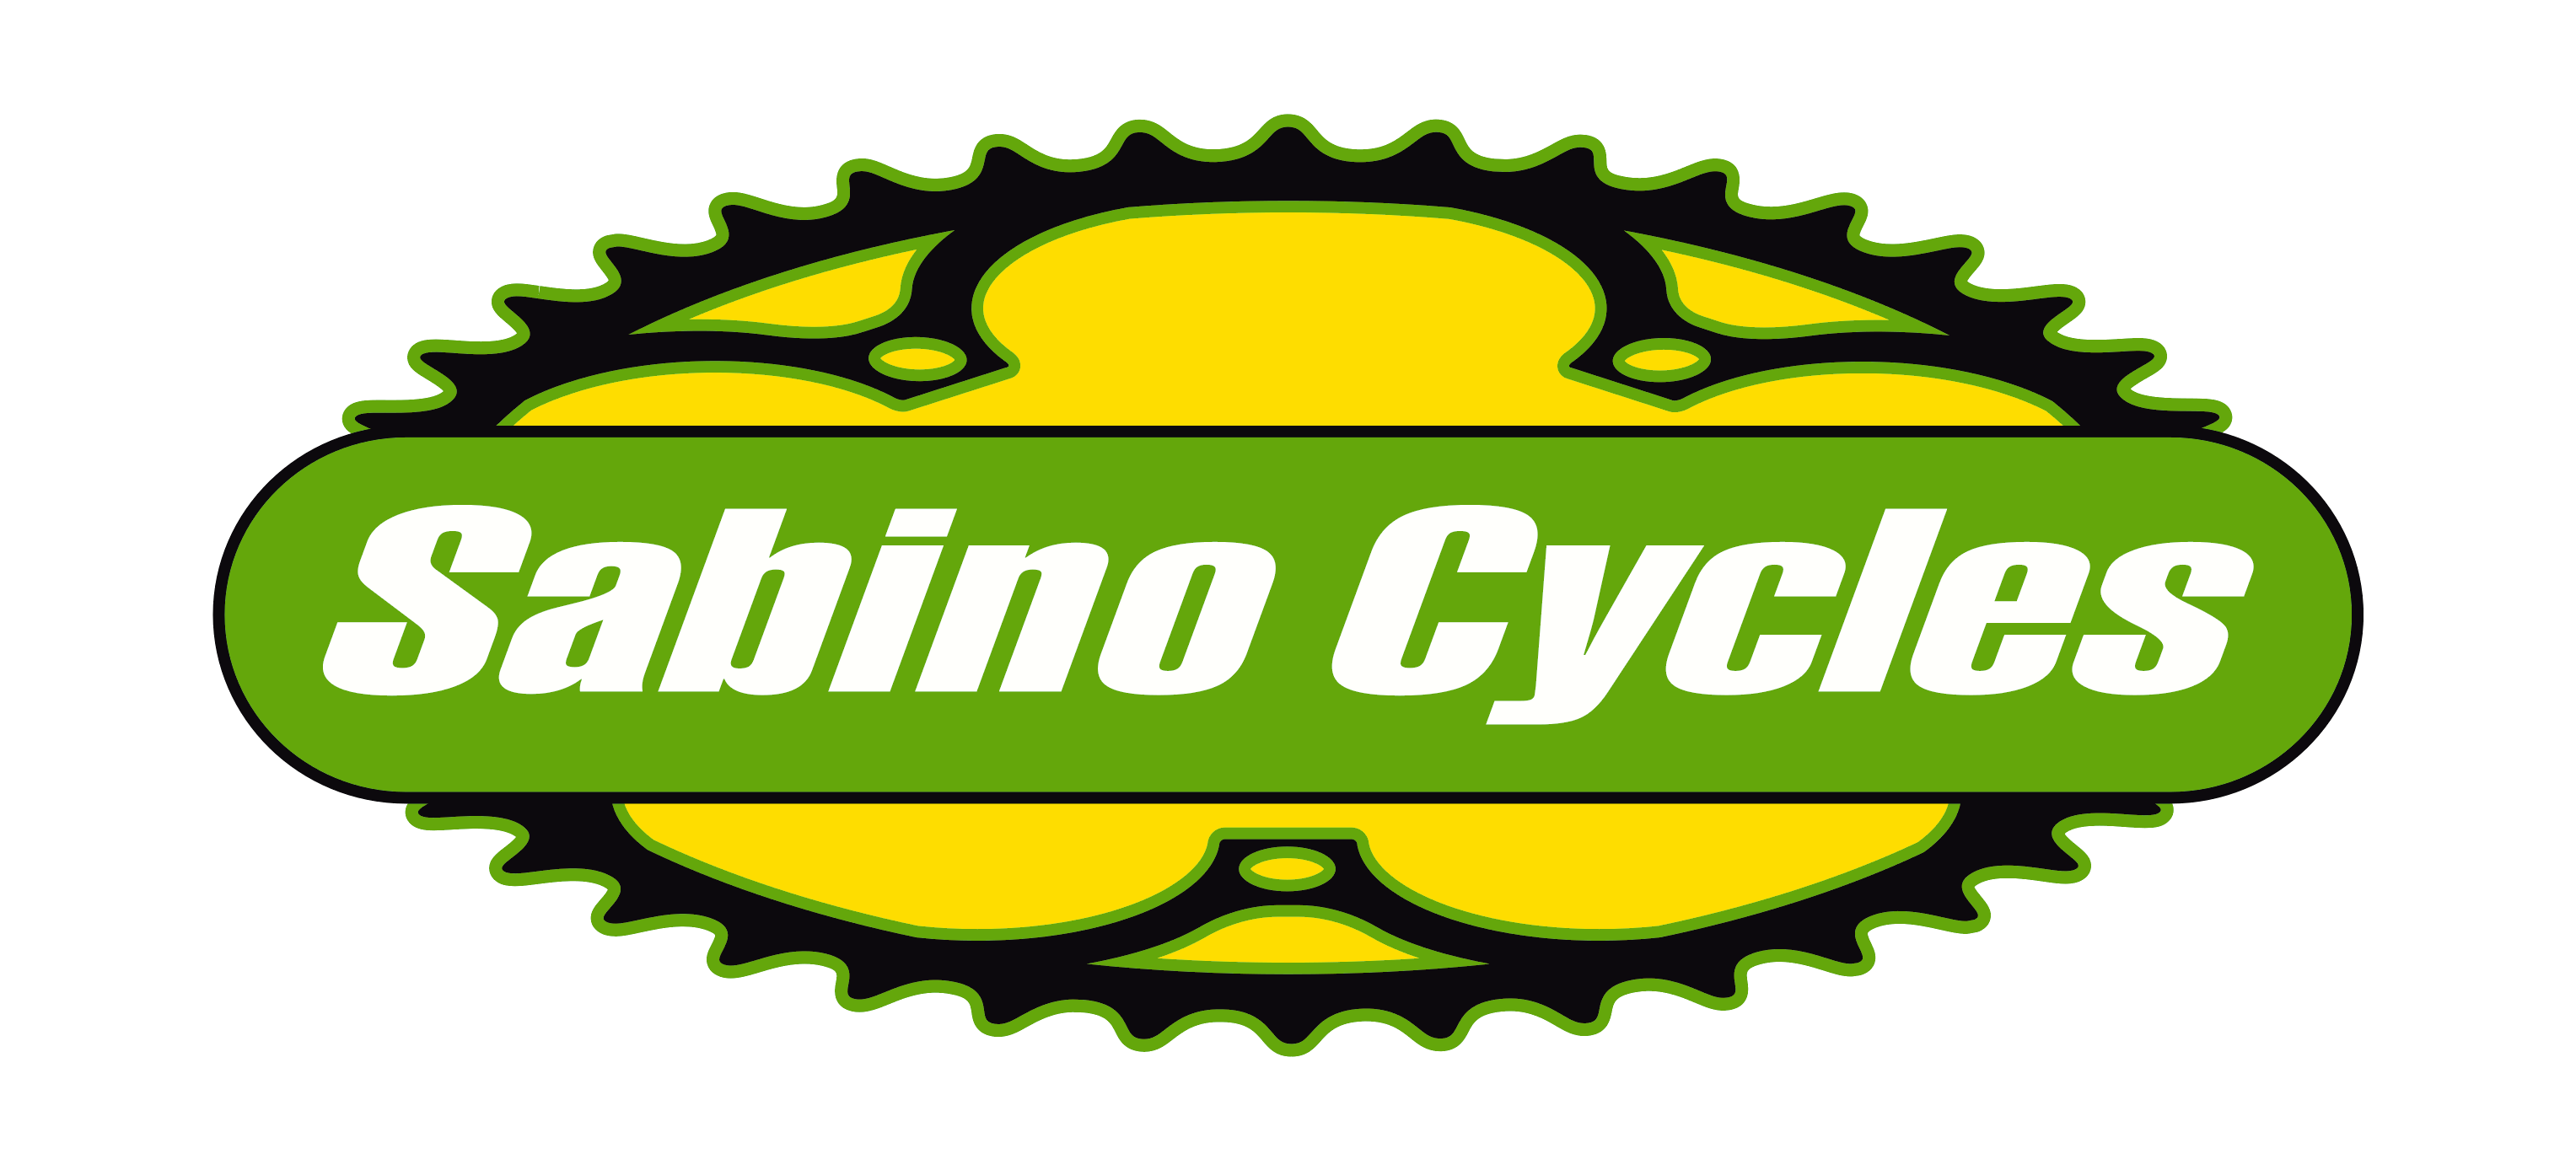 Sabino Cycles Home Page